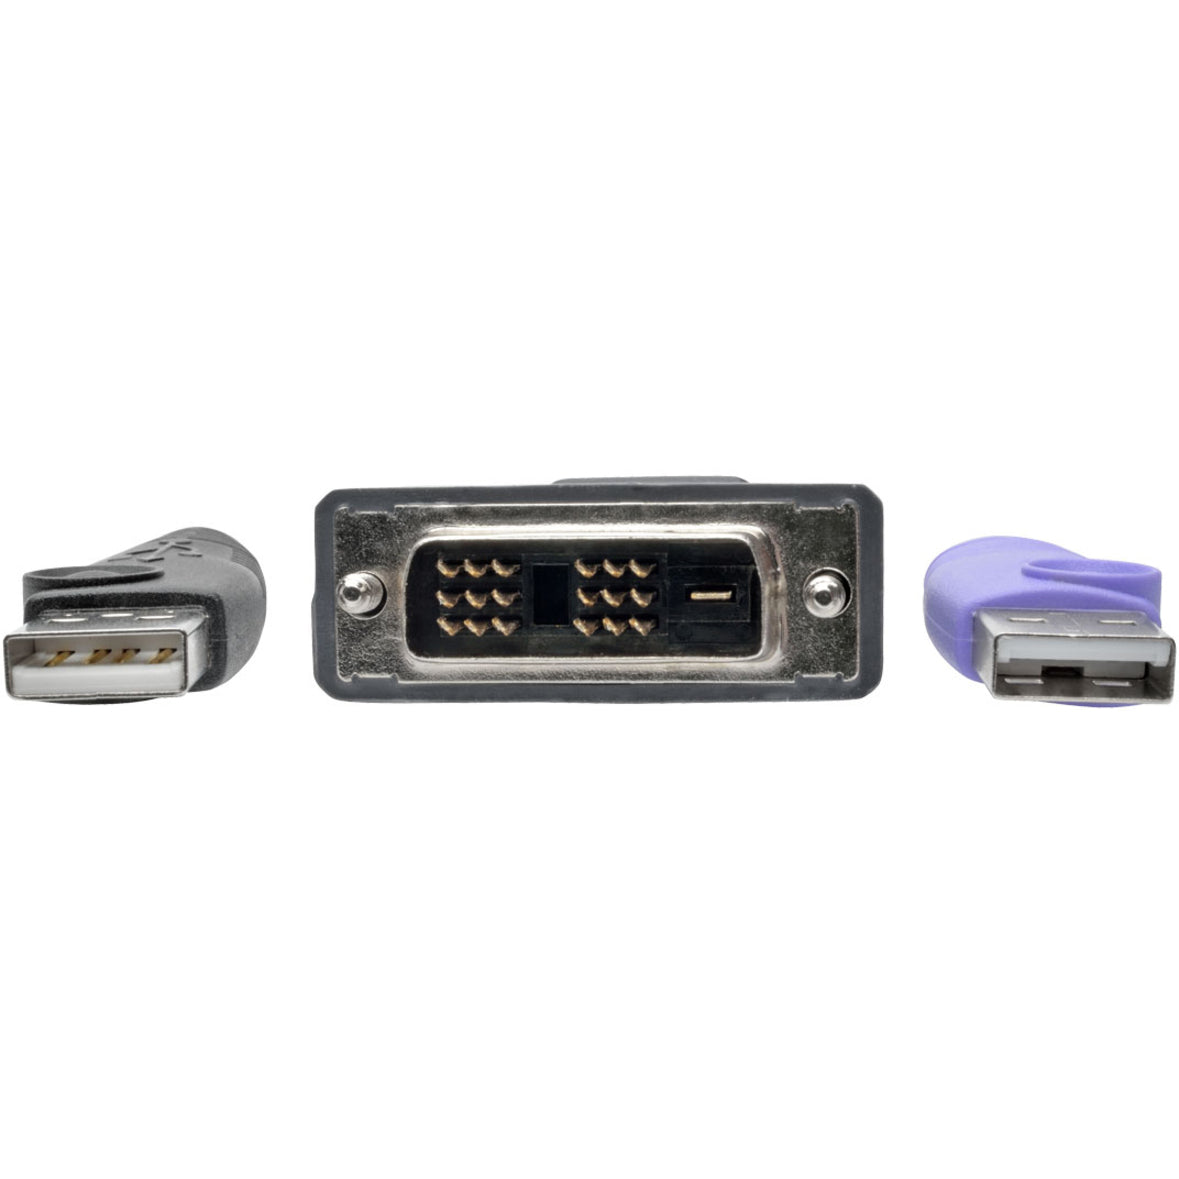 Tripp Lite B055-001-UDV NetDirector DVI USB Server Interface Unit, KVM Console/Extender